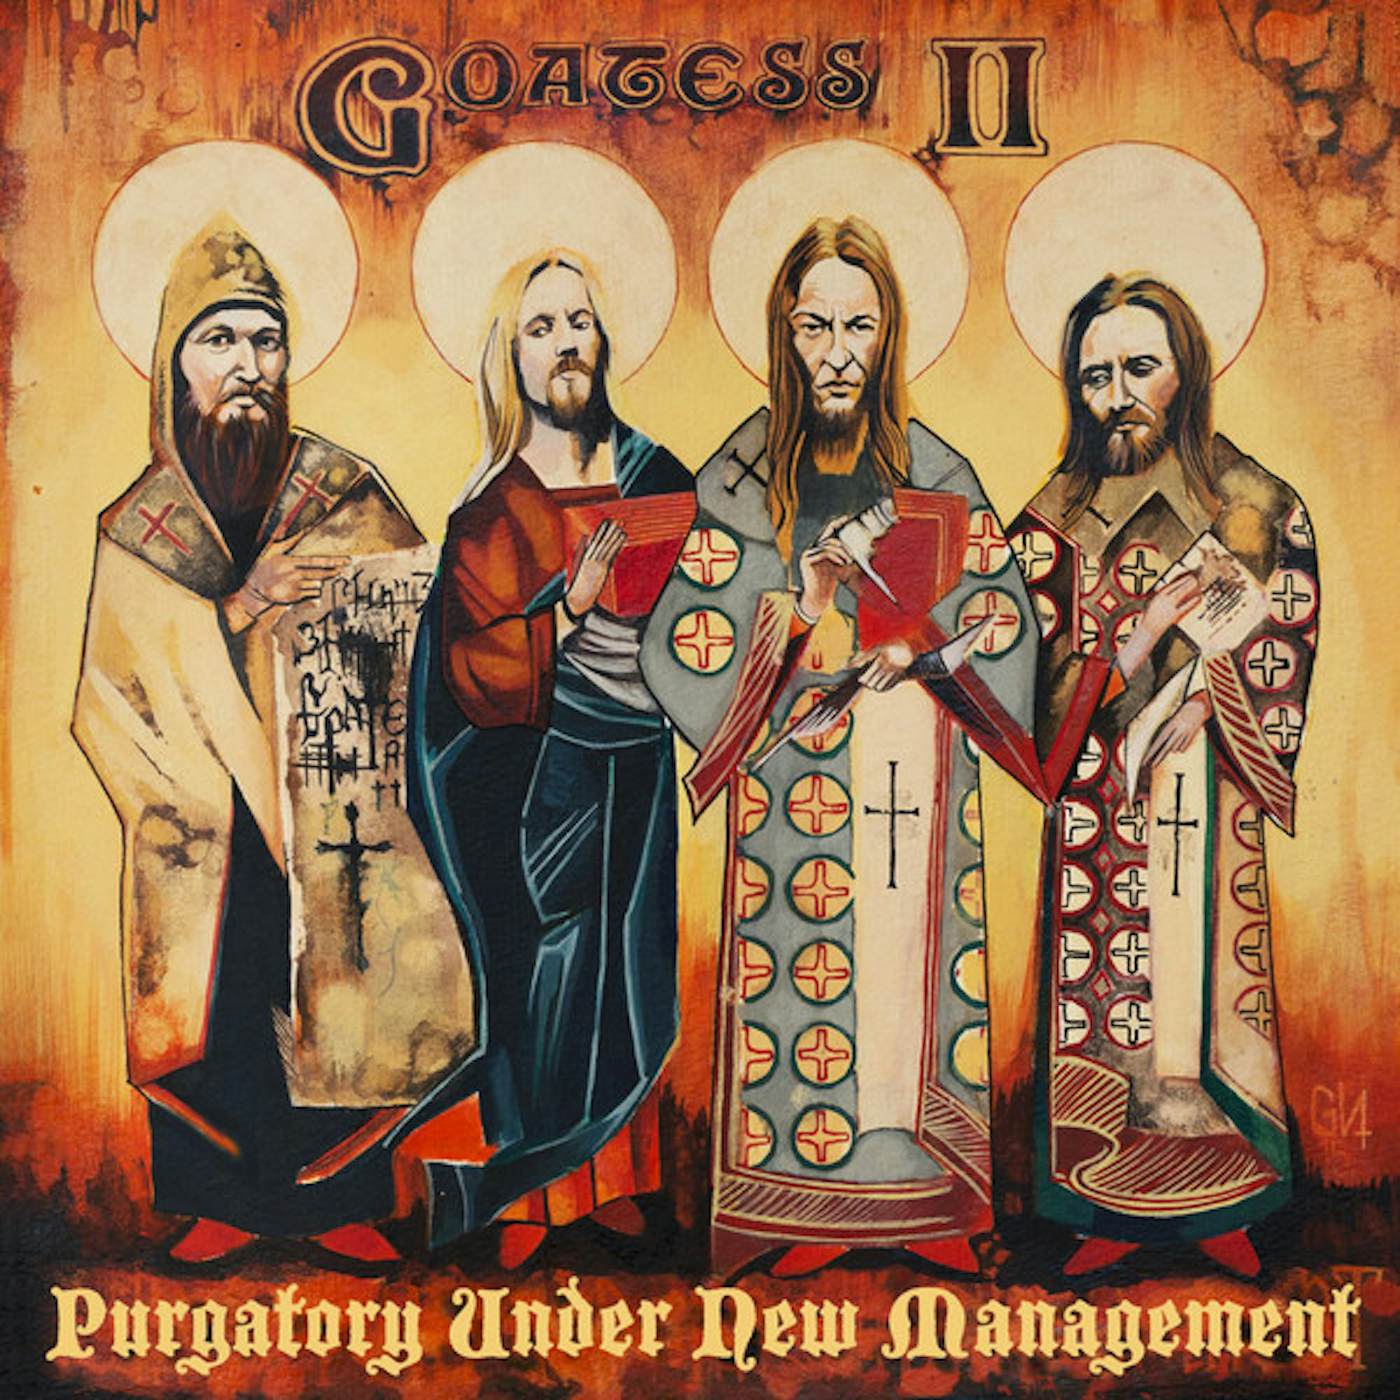 Goatess Purgatory under new management Vinyl Record